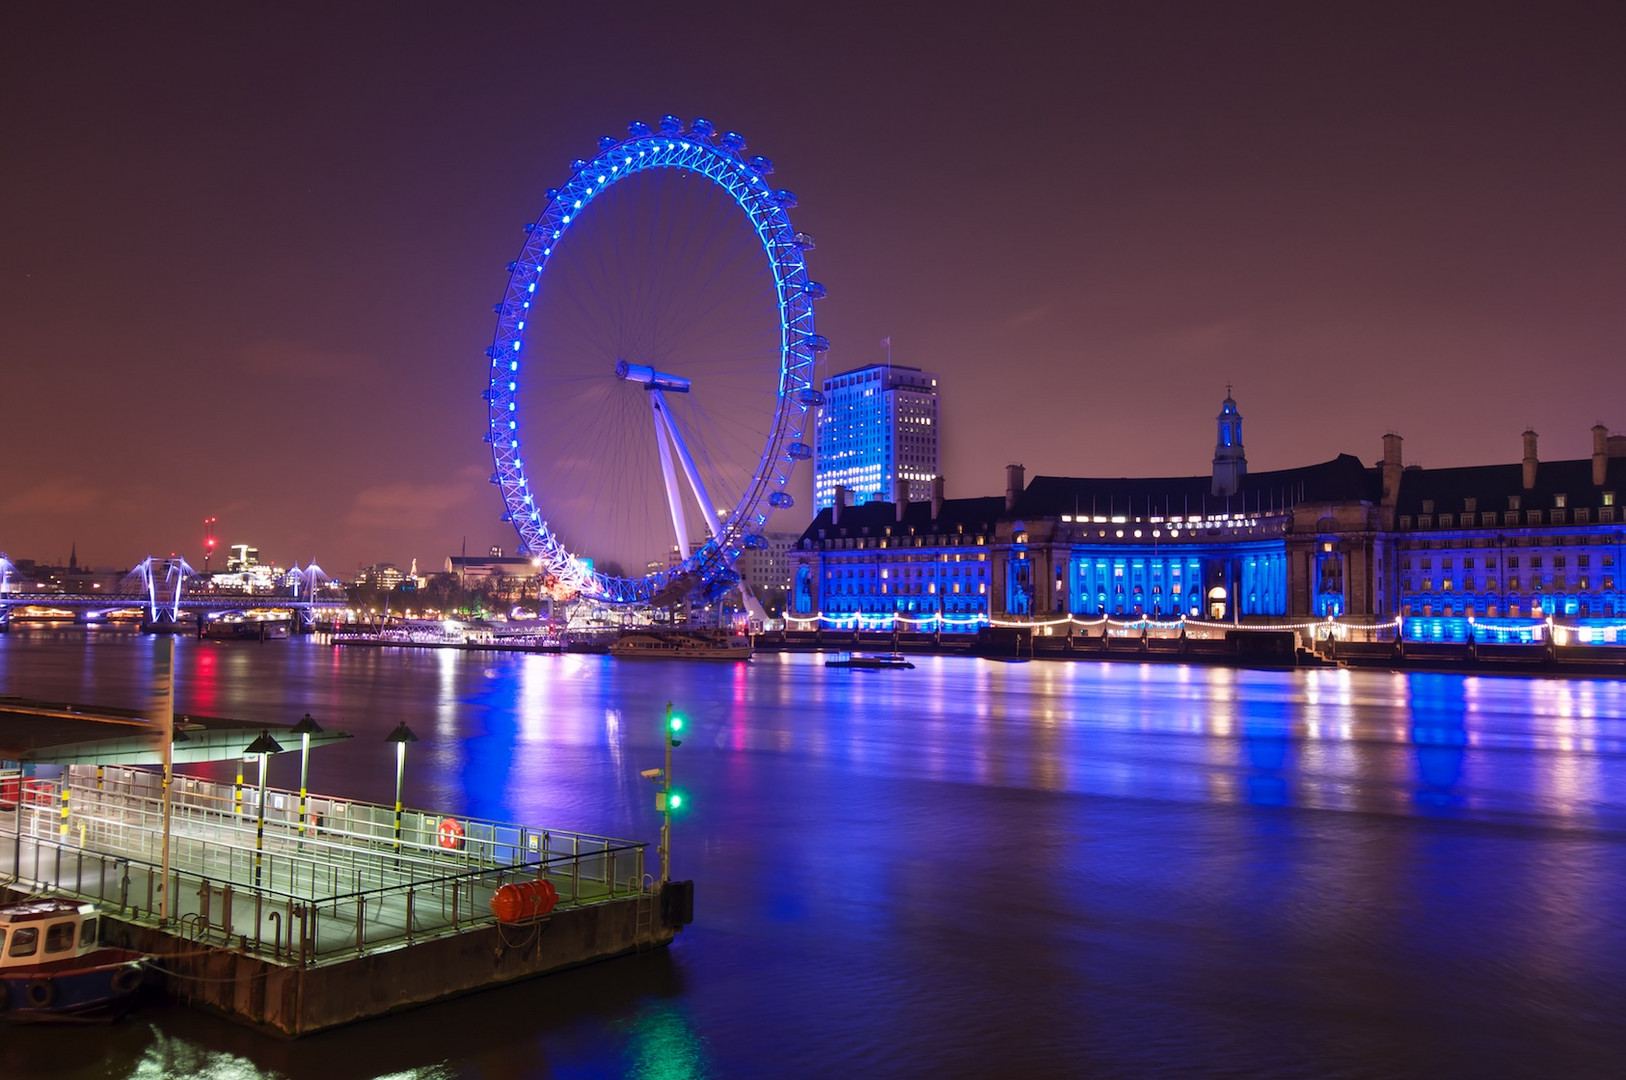 Blue London Eye